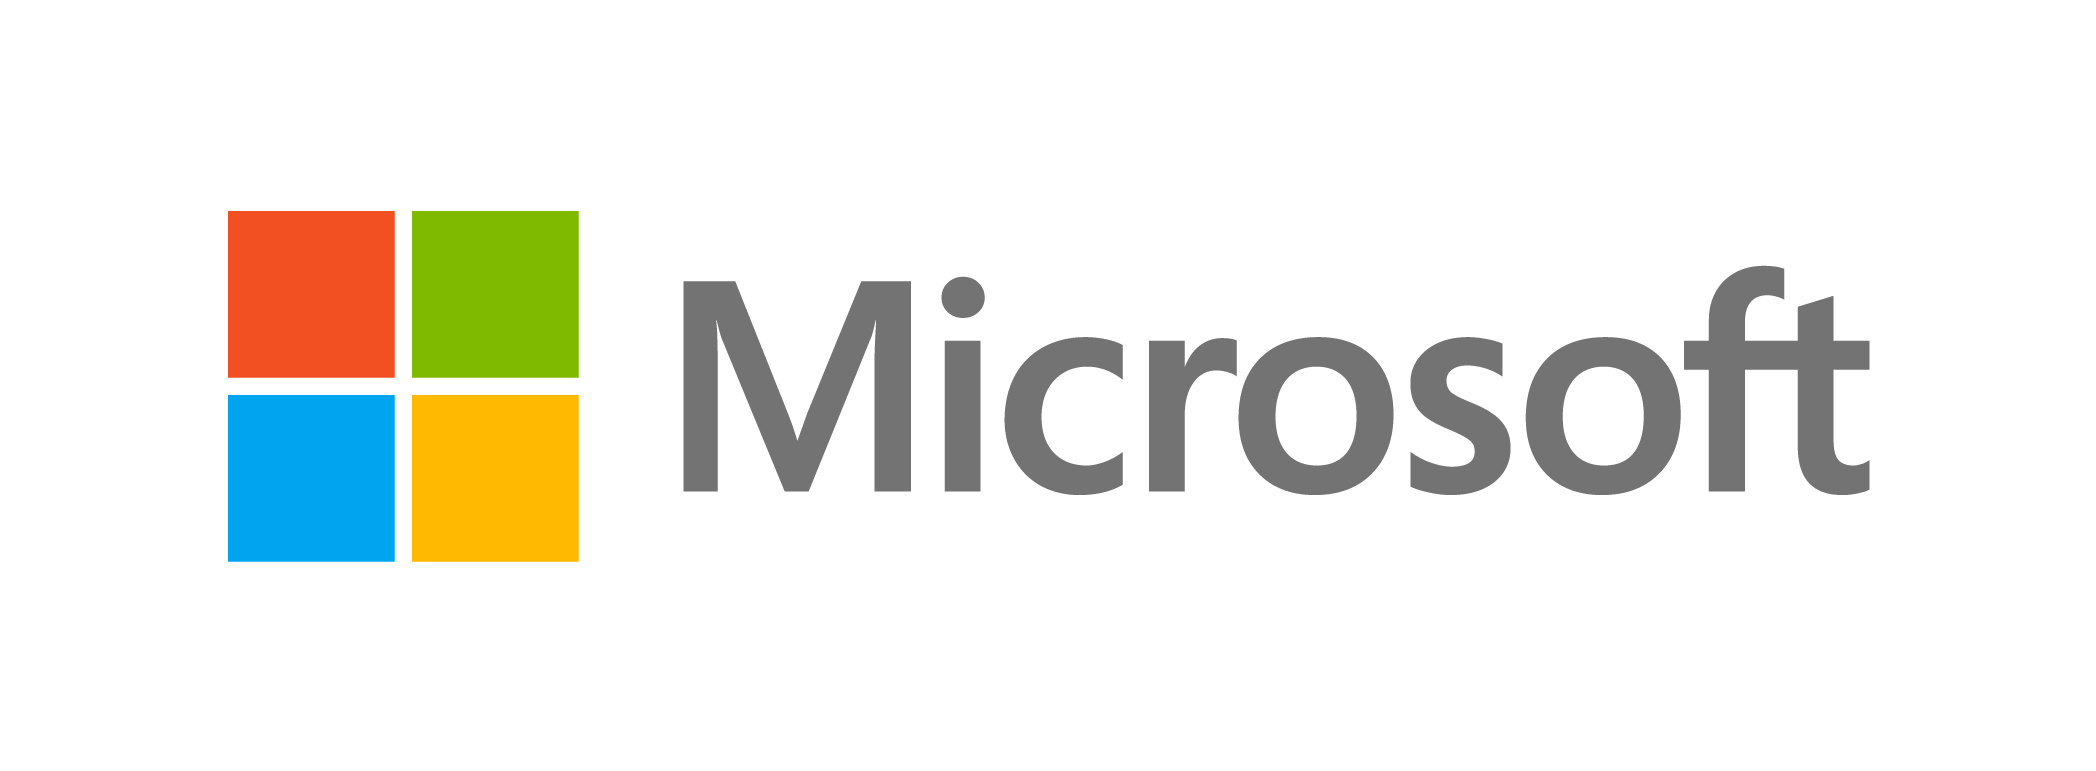 Microsoft-Logo-Transparent-Background.png